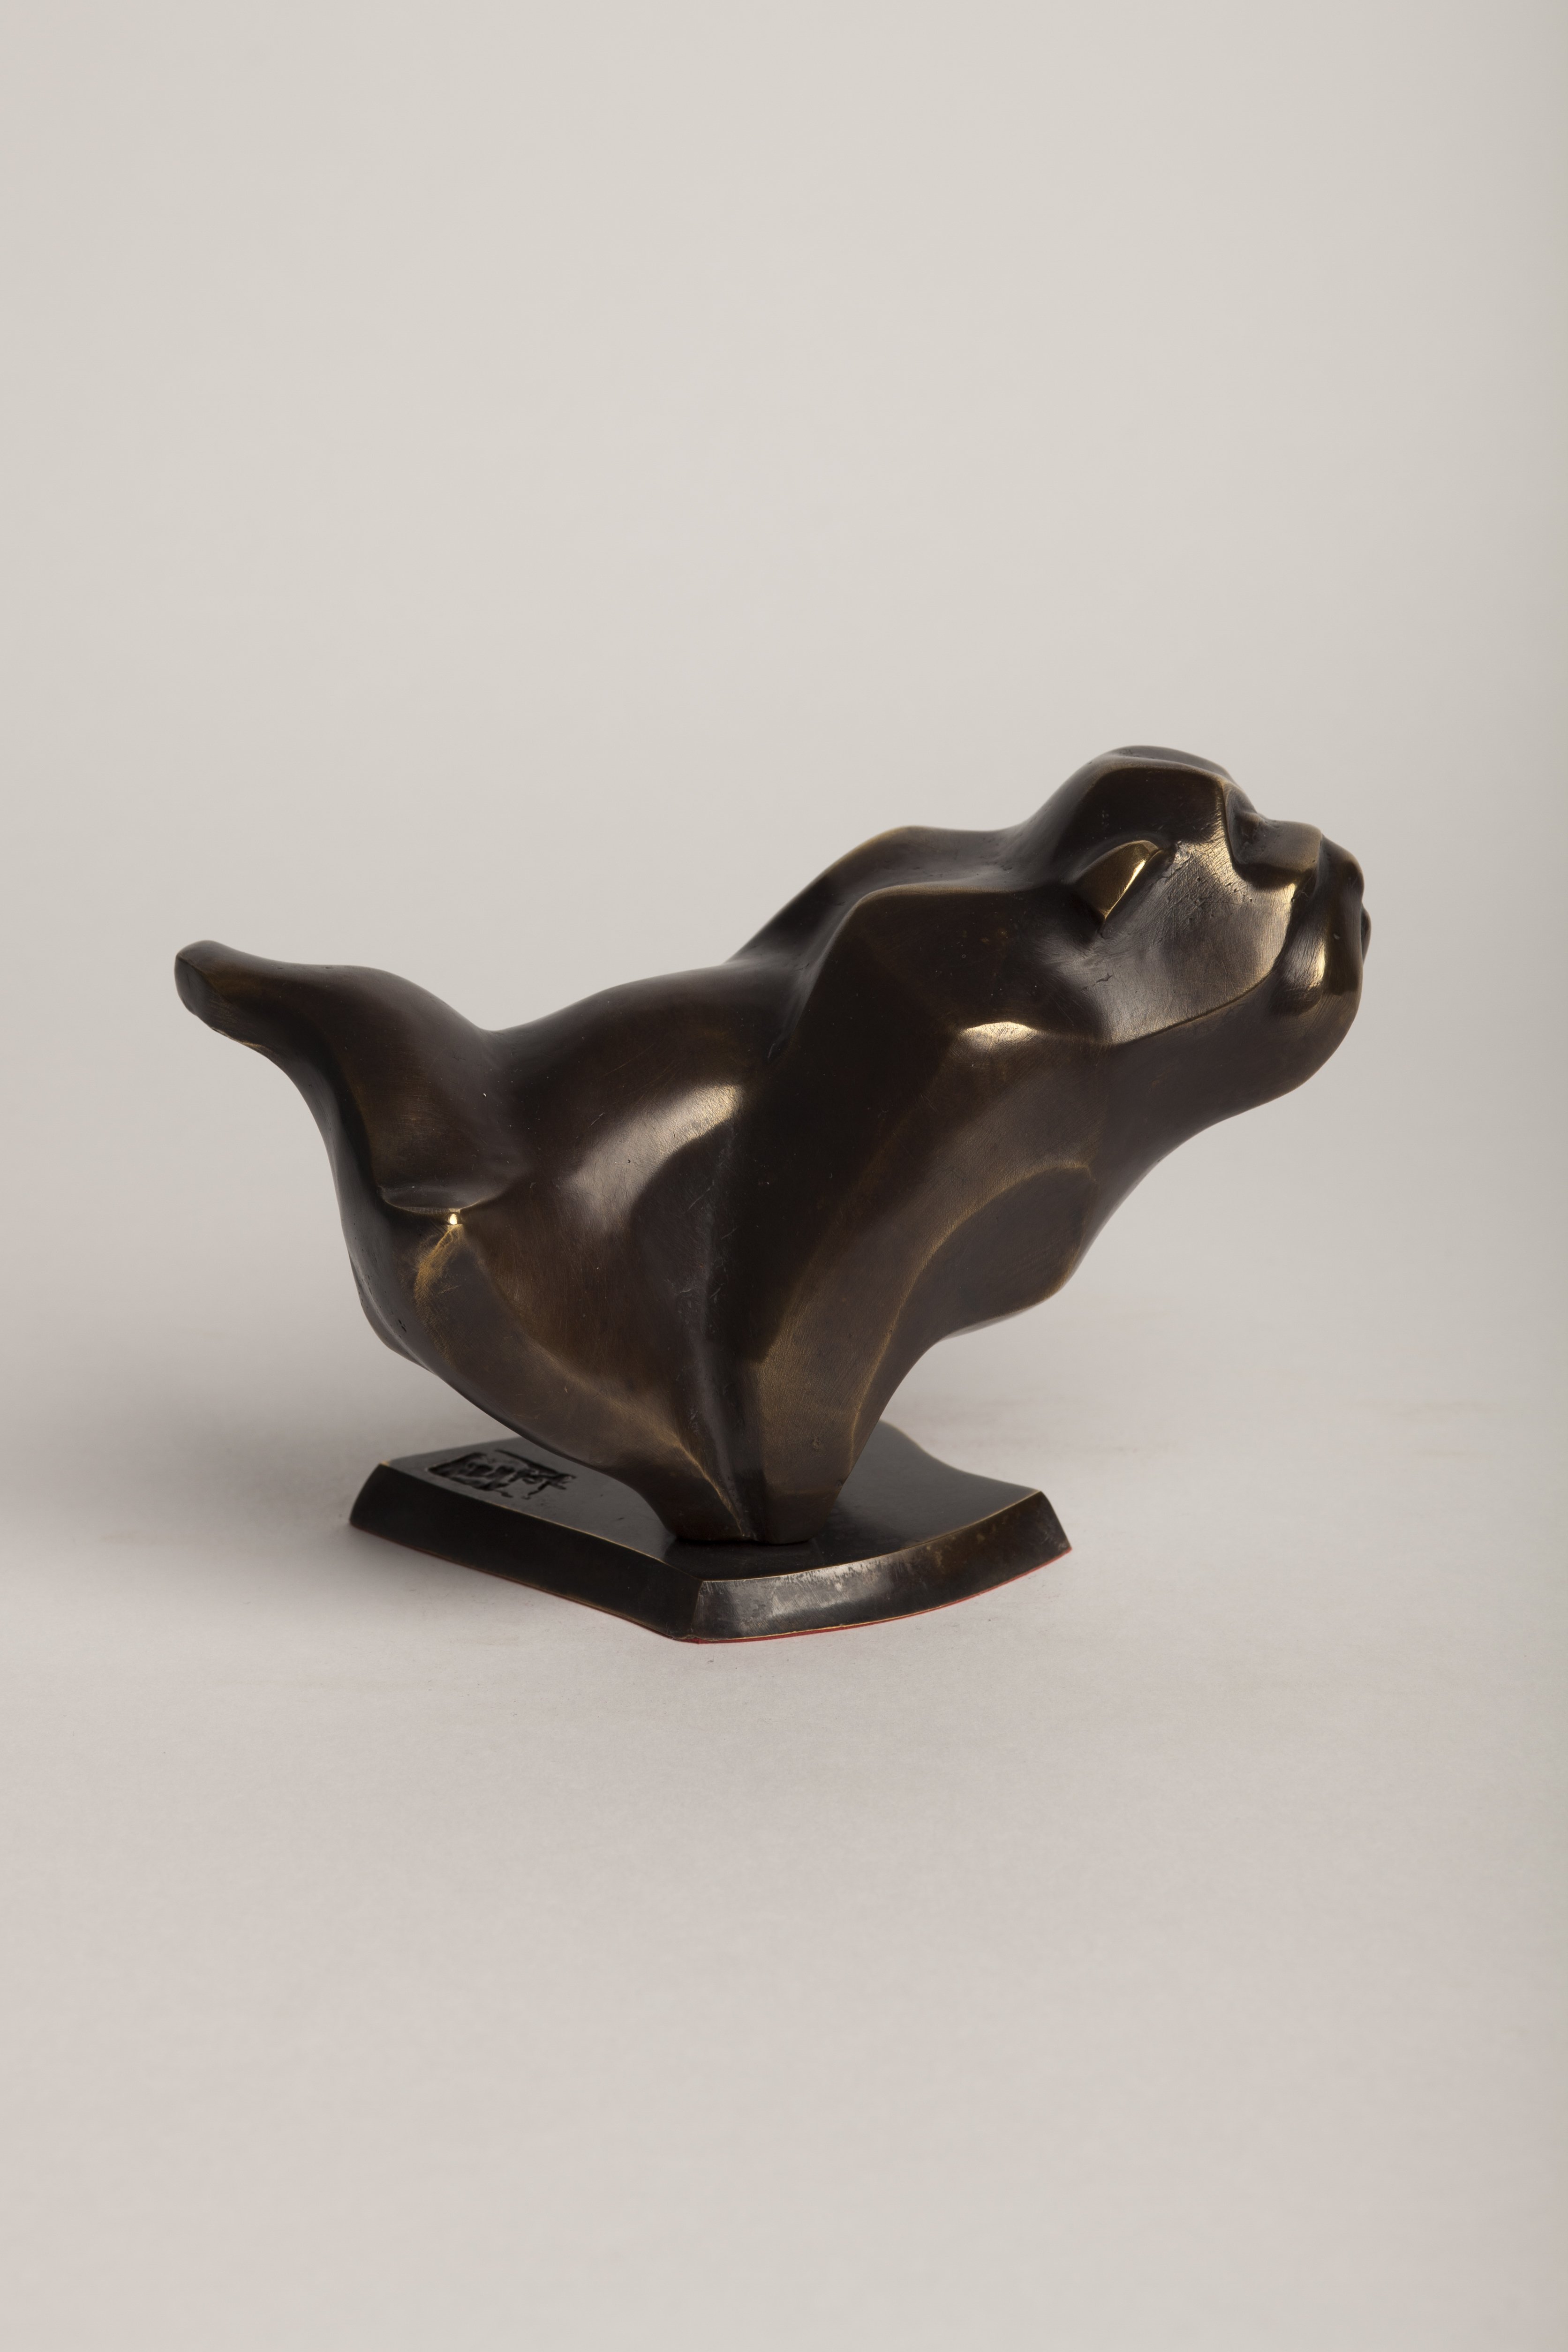 Artist: Veaceslav Jiglitski - Title: bulldog - Medium: Bronze Sculpture - Year: 2018